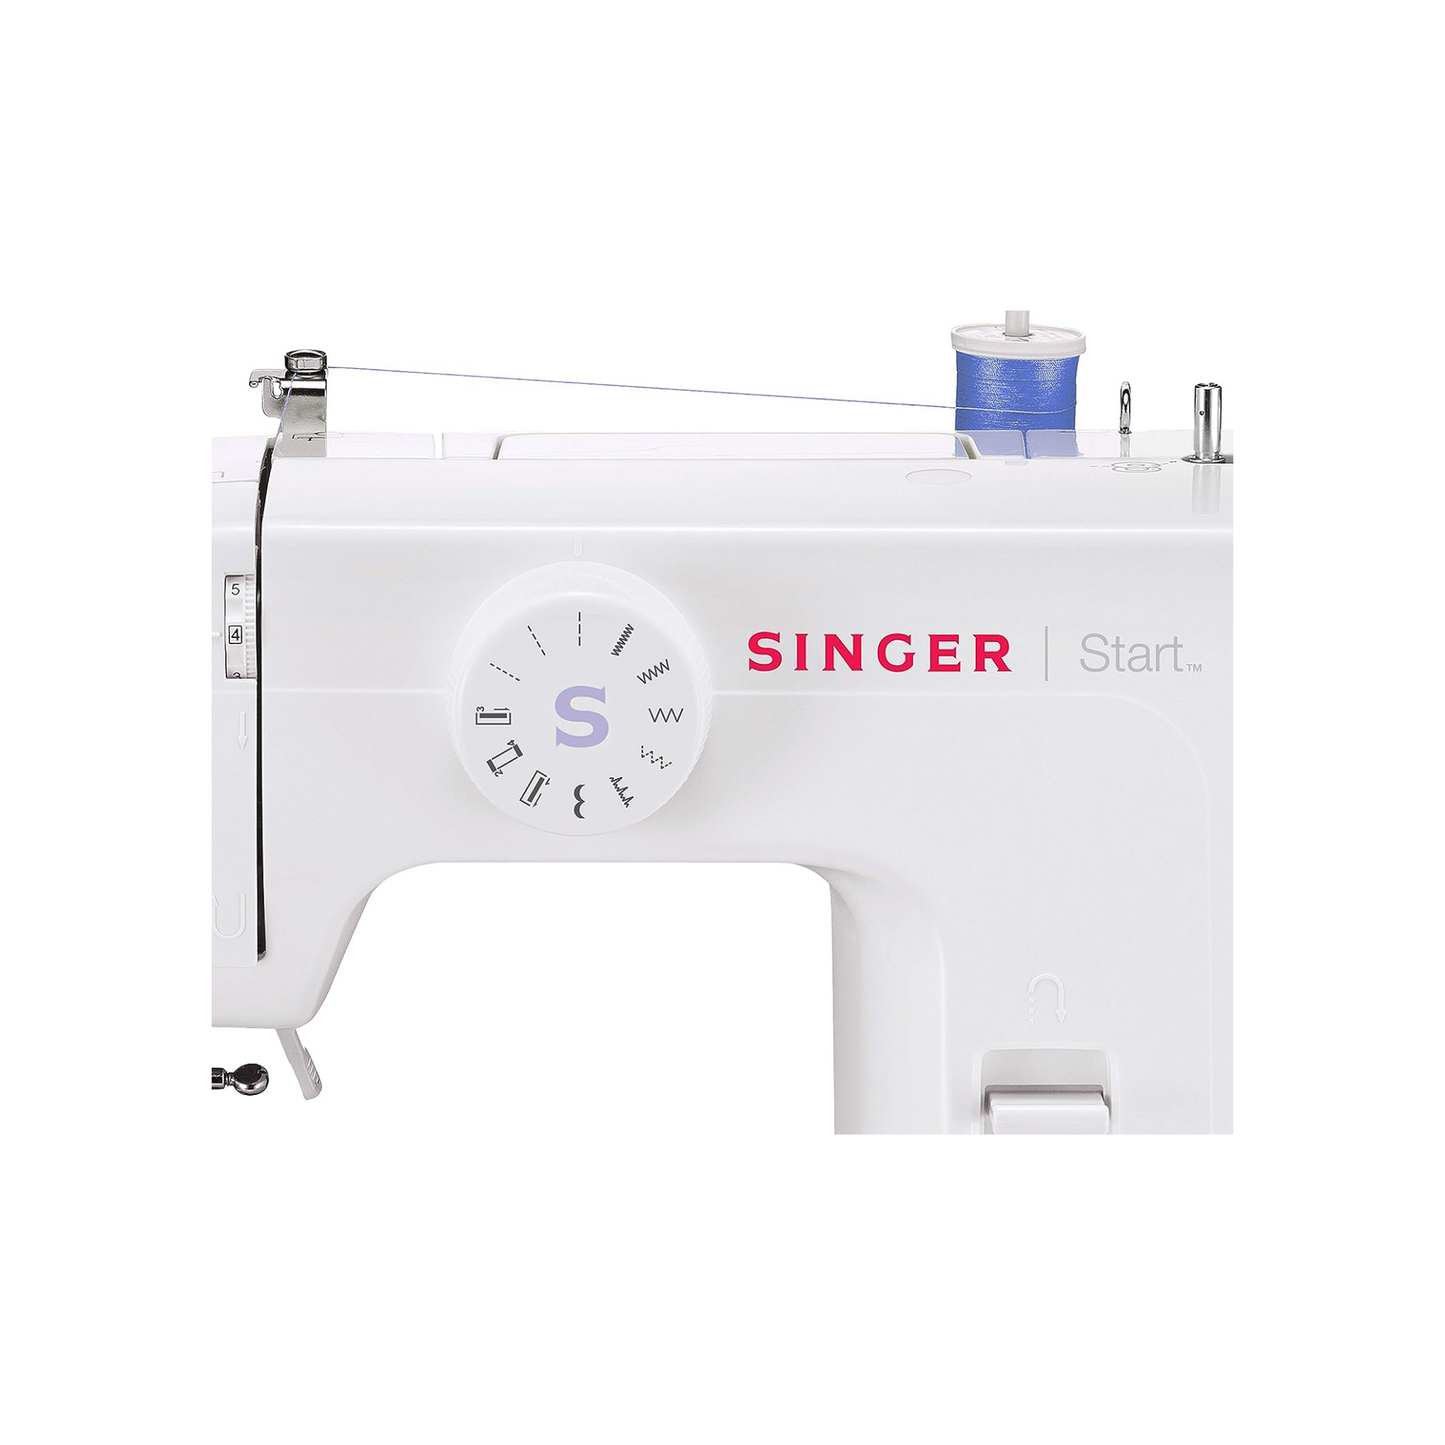 Singer start 1306 - Sewing machine - White - Close view